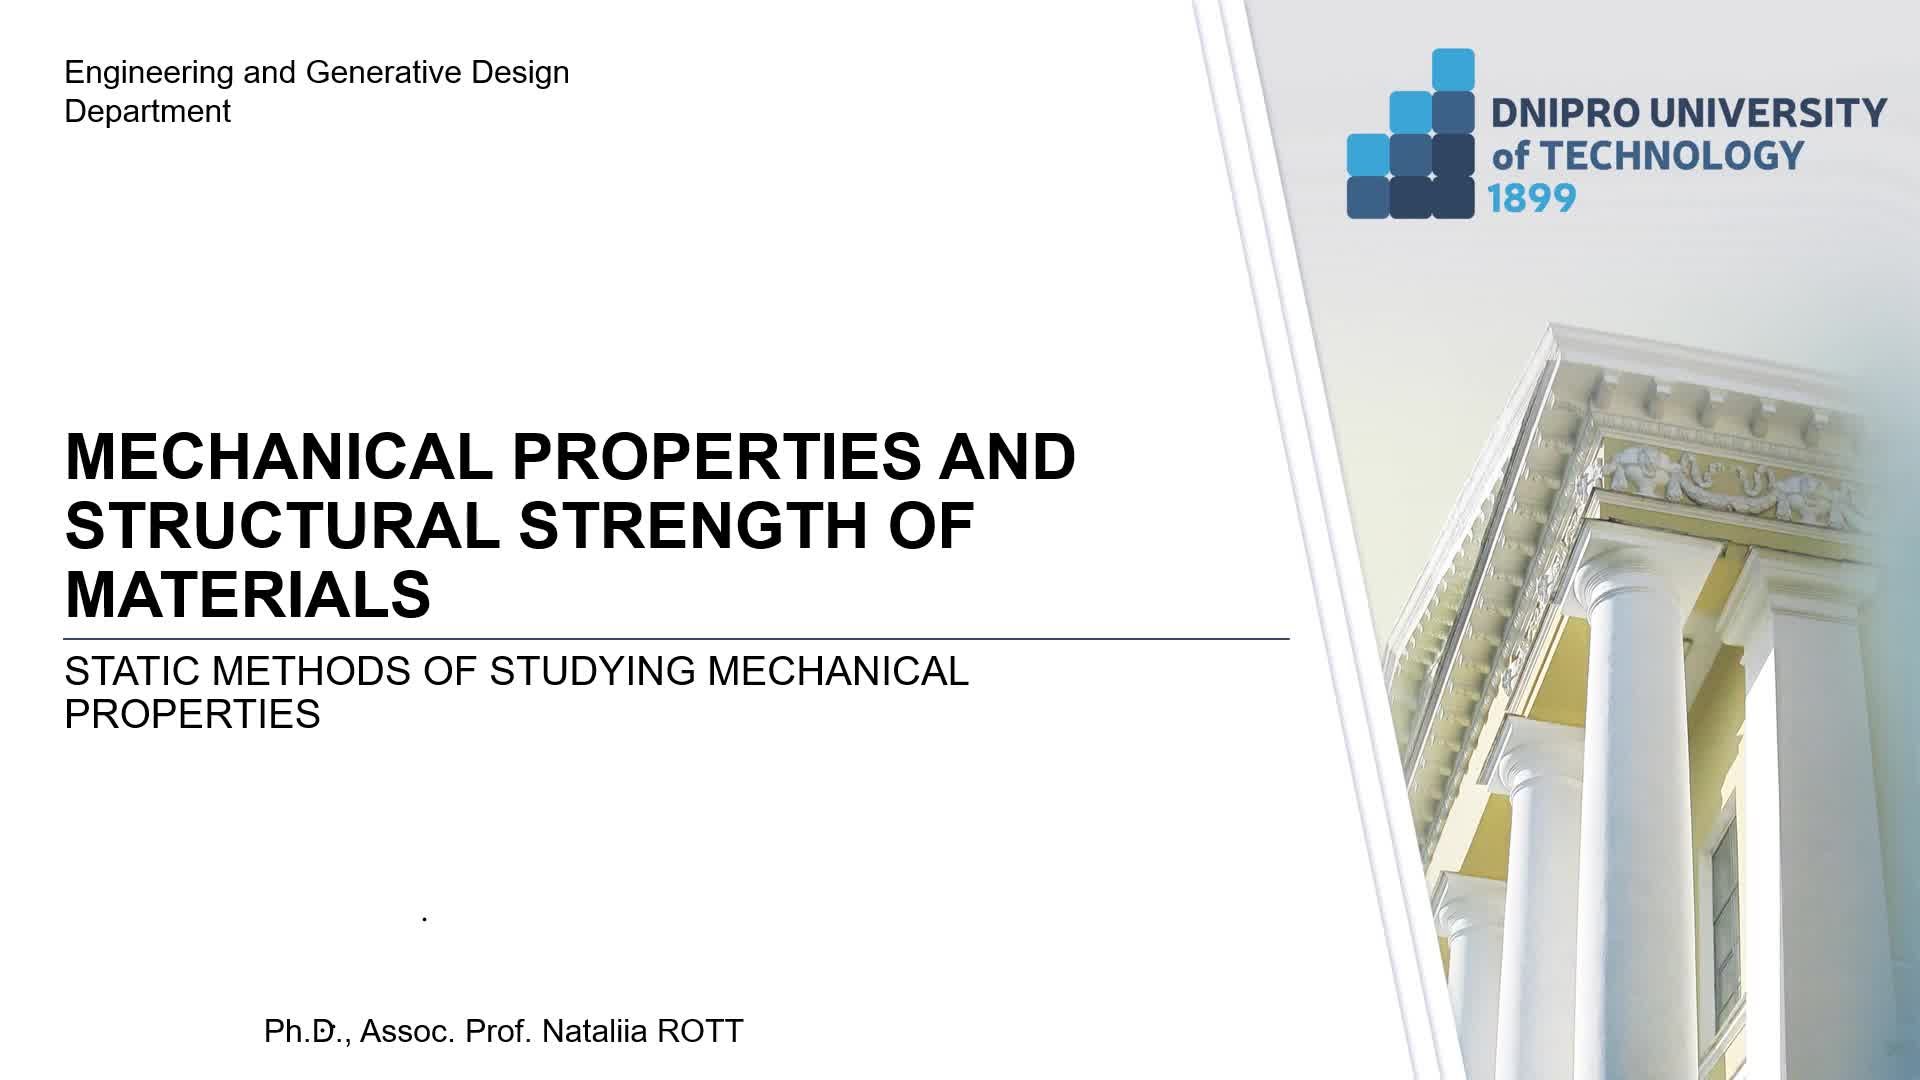 Static methods of studying mechanical properties